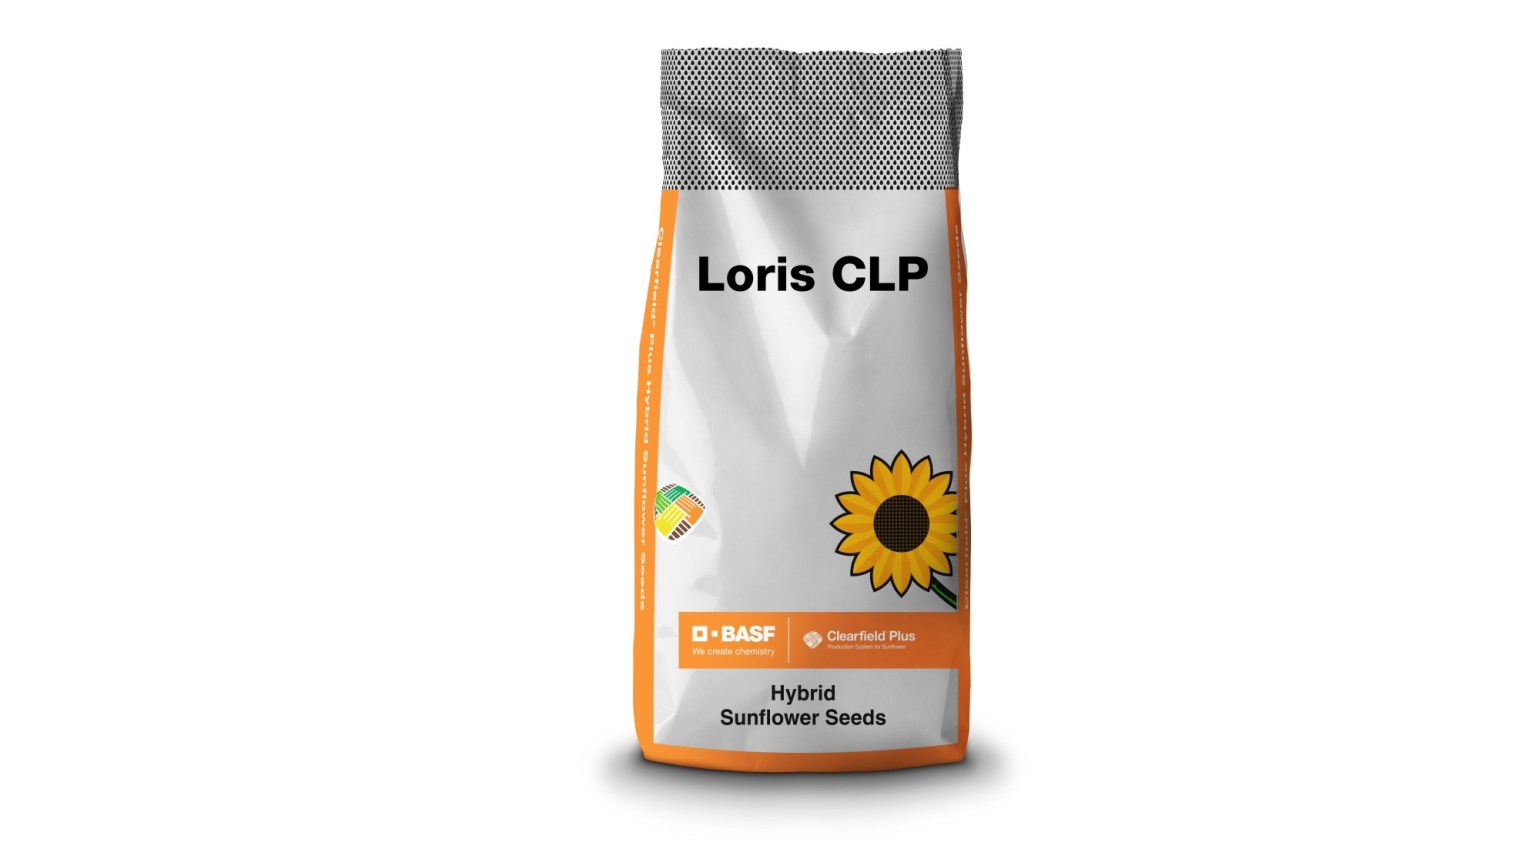 Sunflower Loris CLP Hybrid Seed Bag Clearfield Plus SS BASF 1540x866